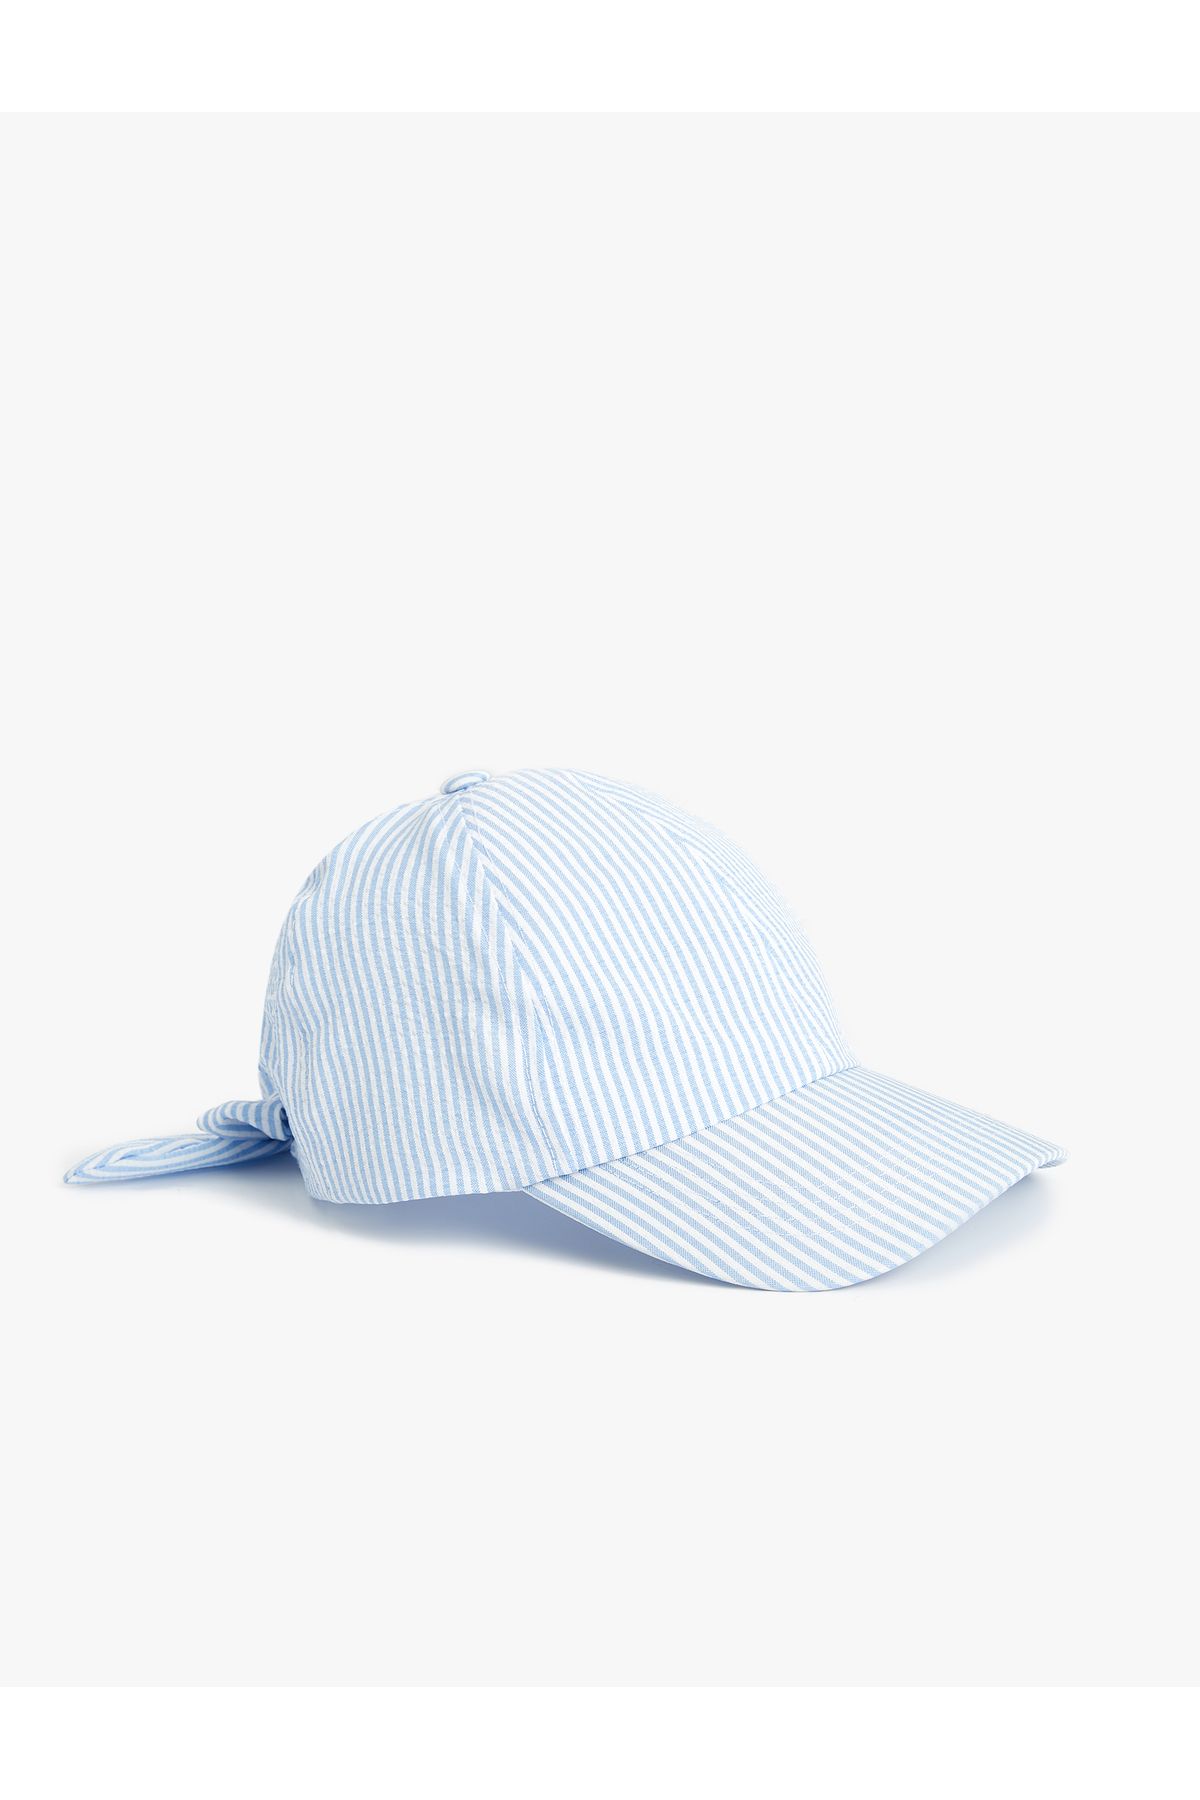 Koton Cap Şapka Pamuklu Bağlama Detaylı